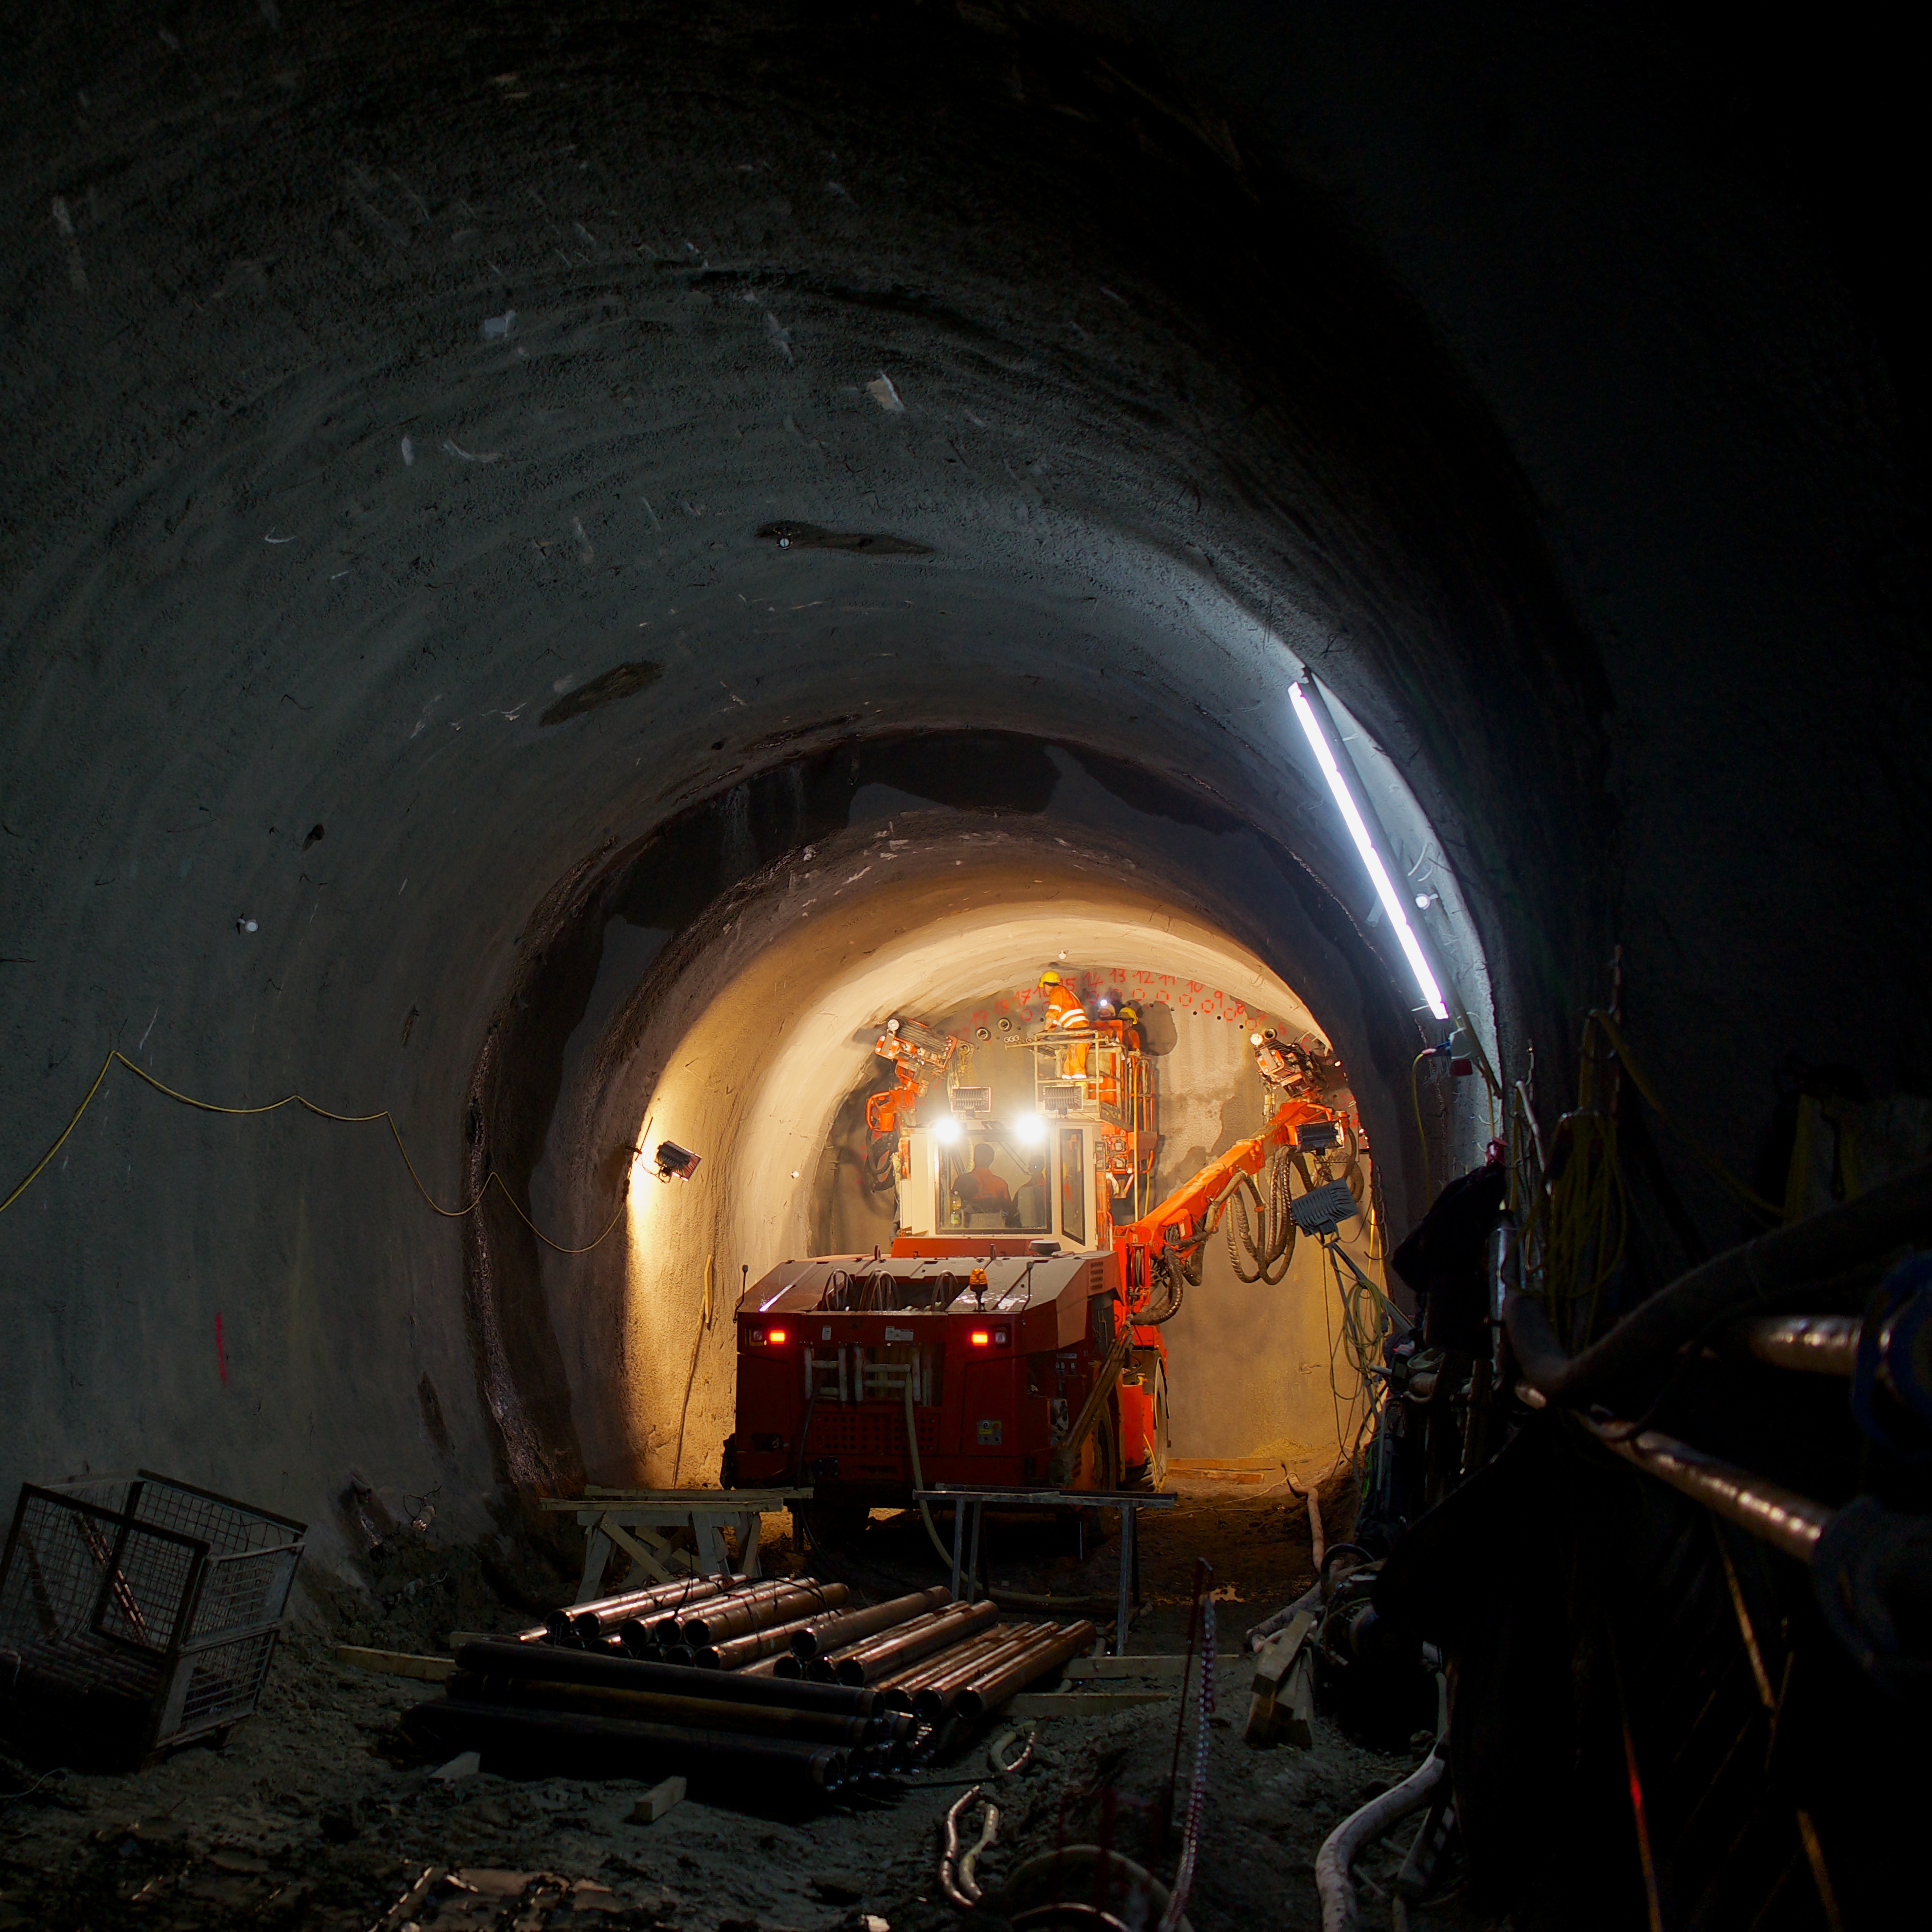 U-Bahn Wien - Baulos U1-8 Alaudagasse - Tunnel construction